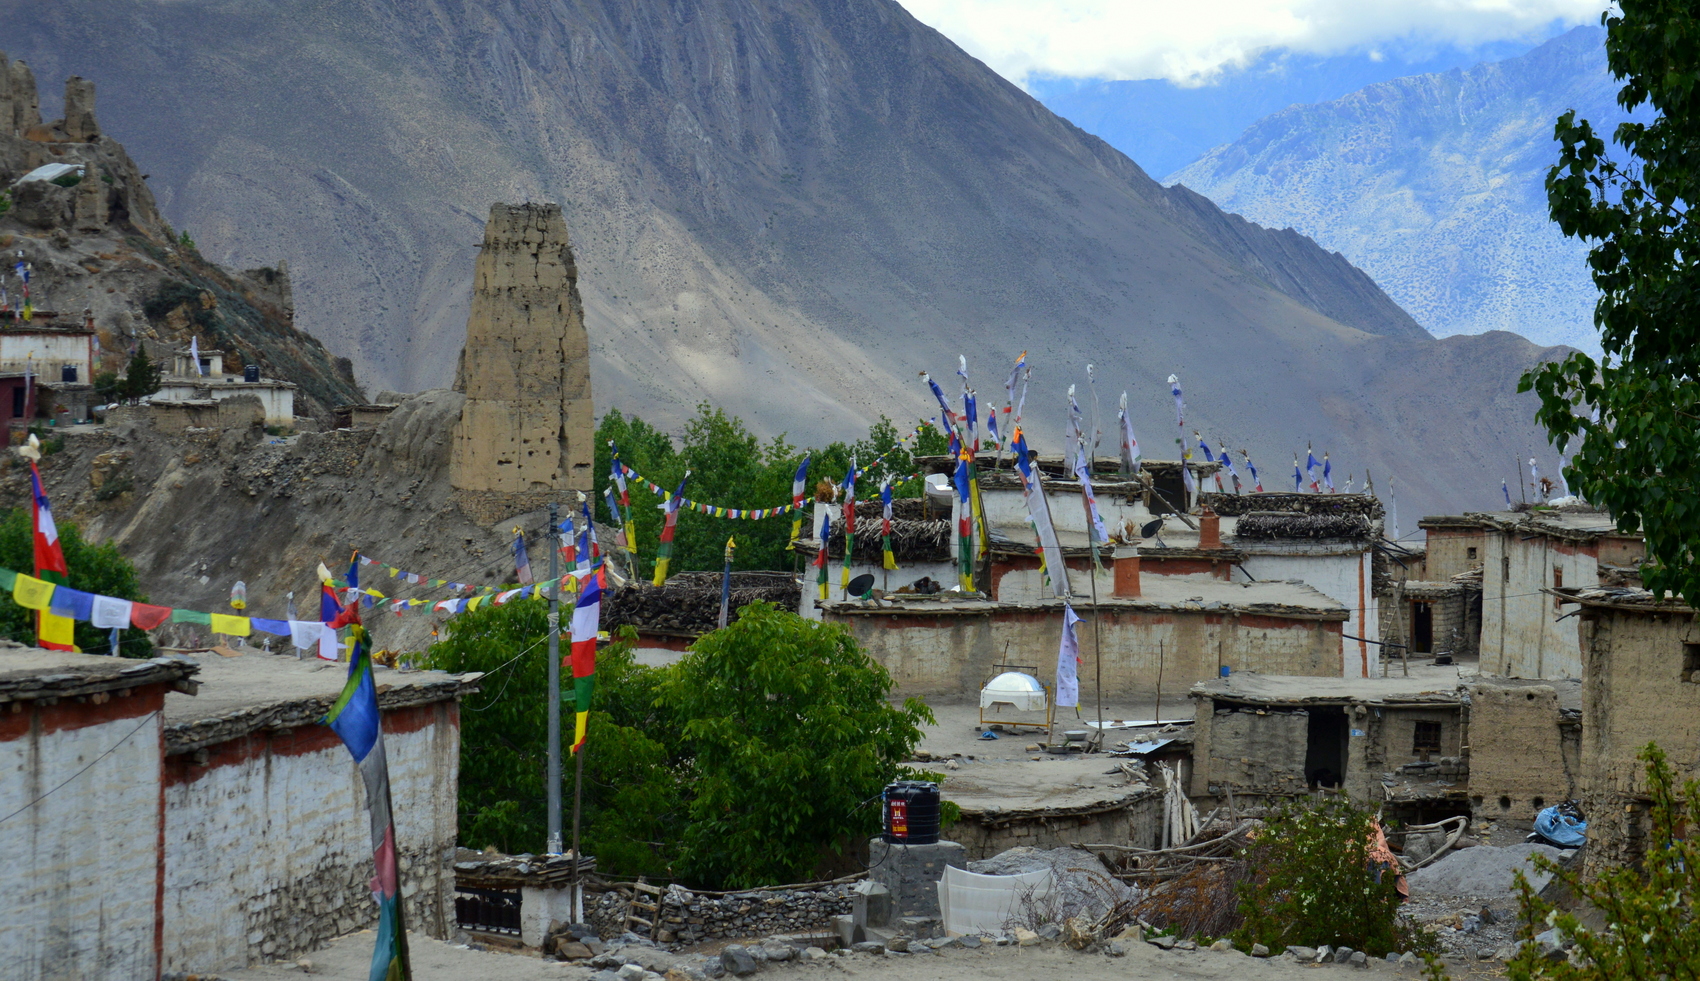 Village with prayer flags near Muktinath, Nepal